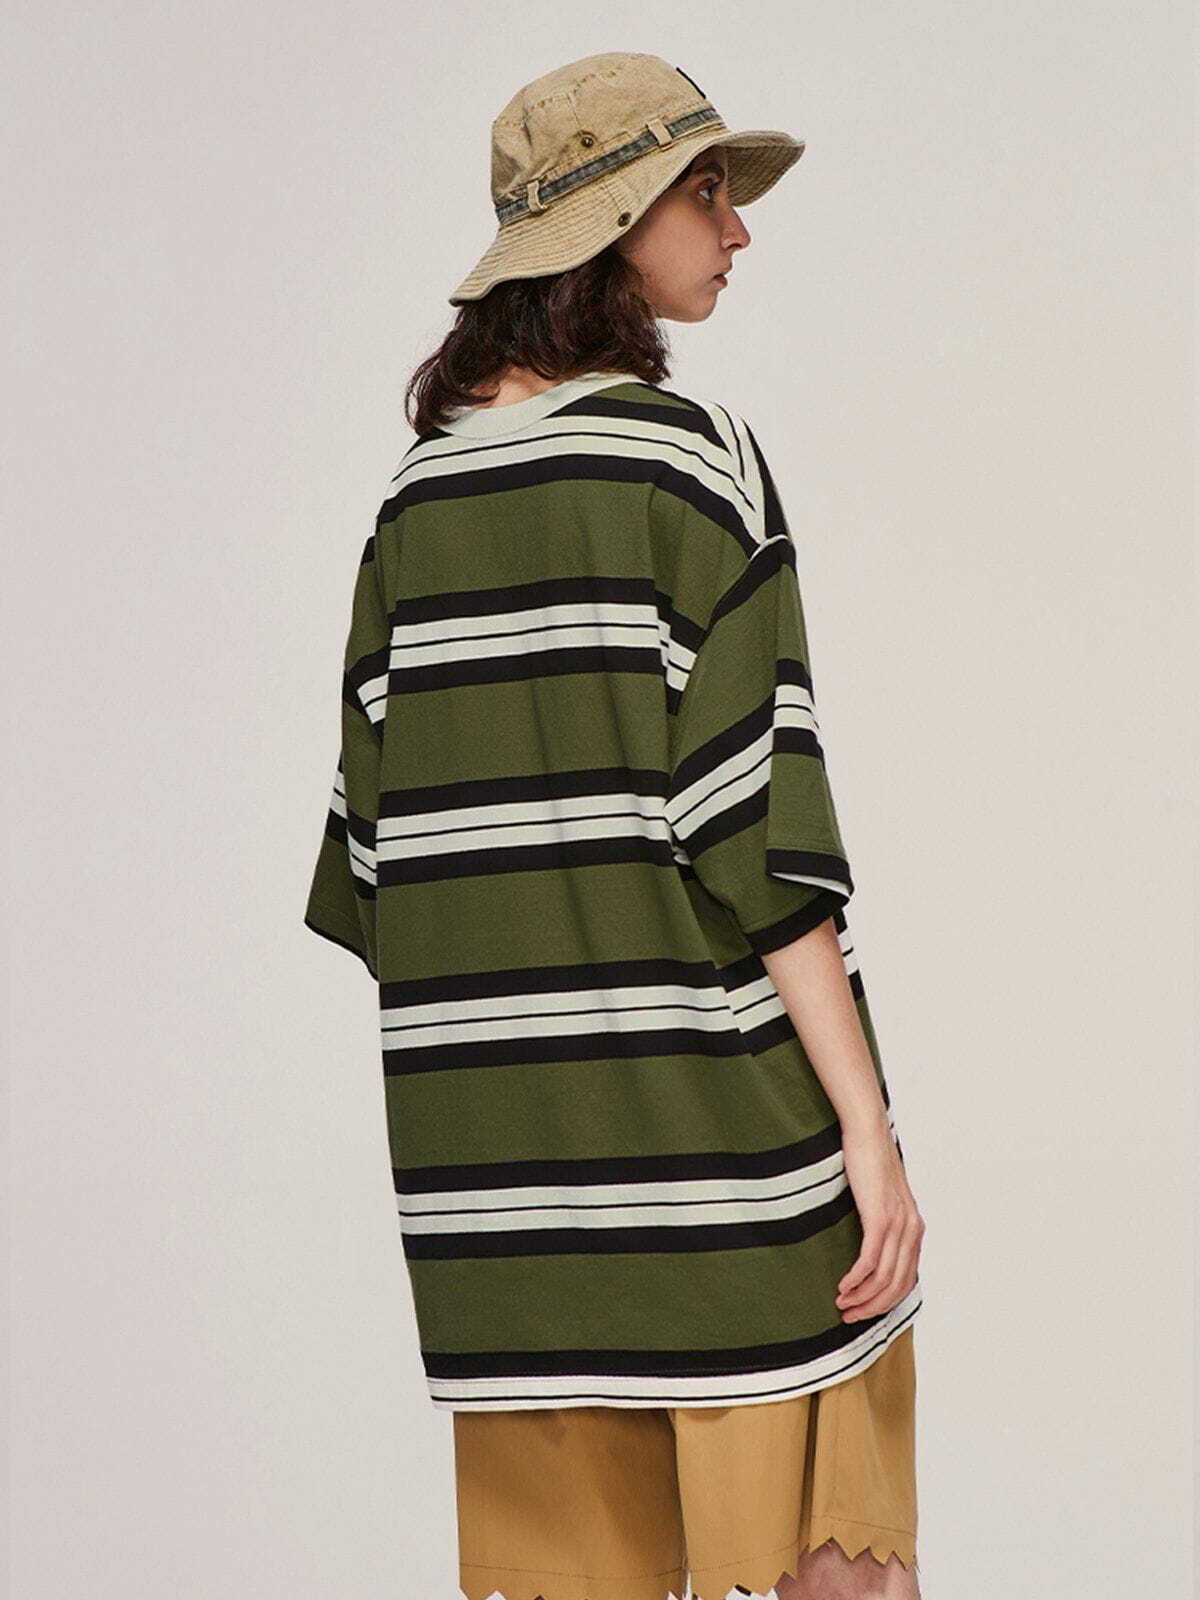 vibrant stripes print tee retro streetwear essential 2117